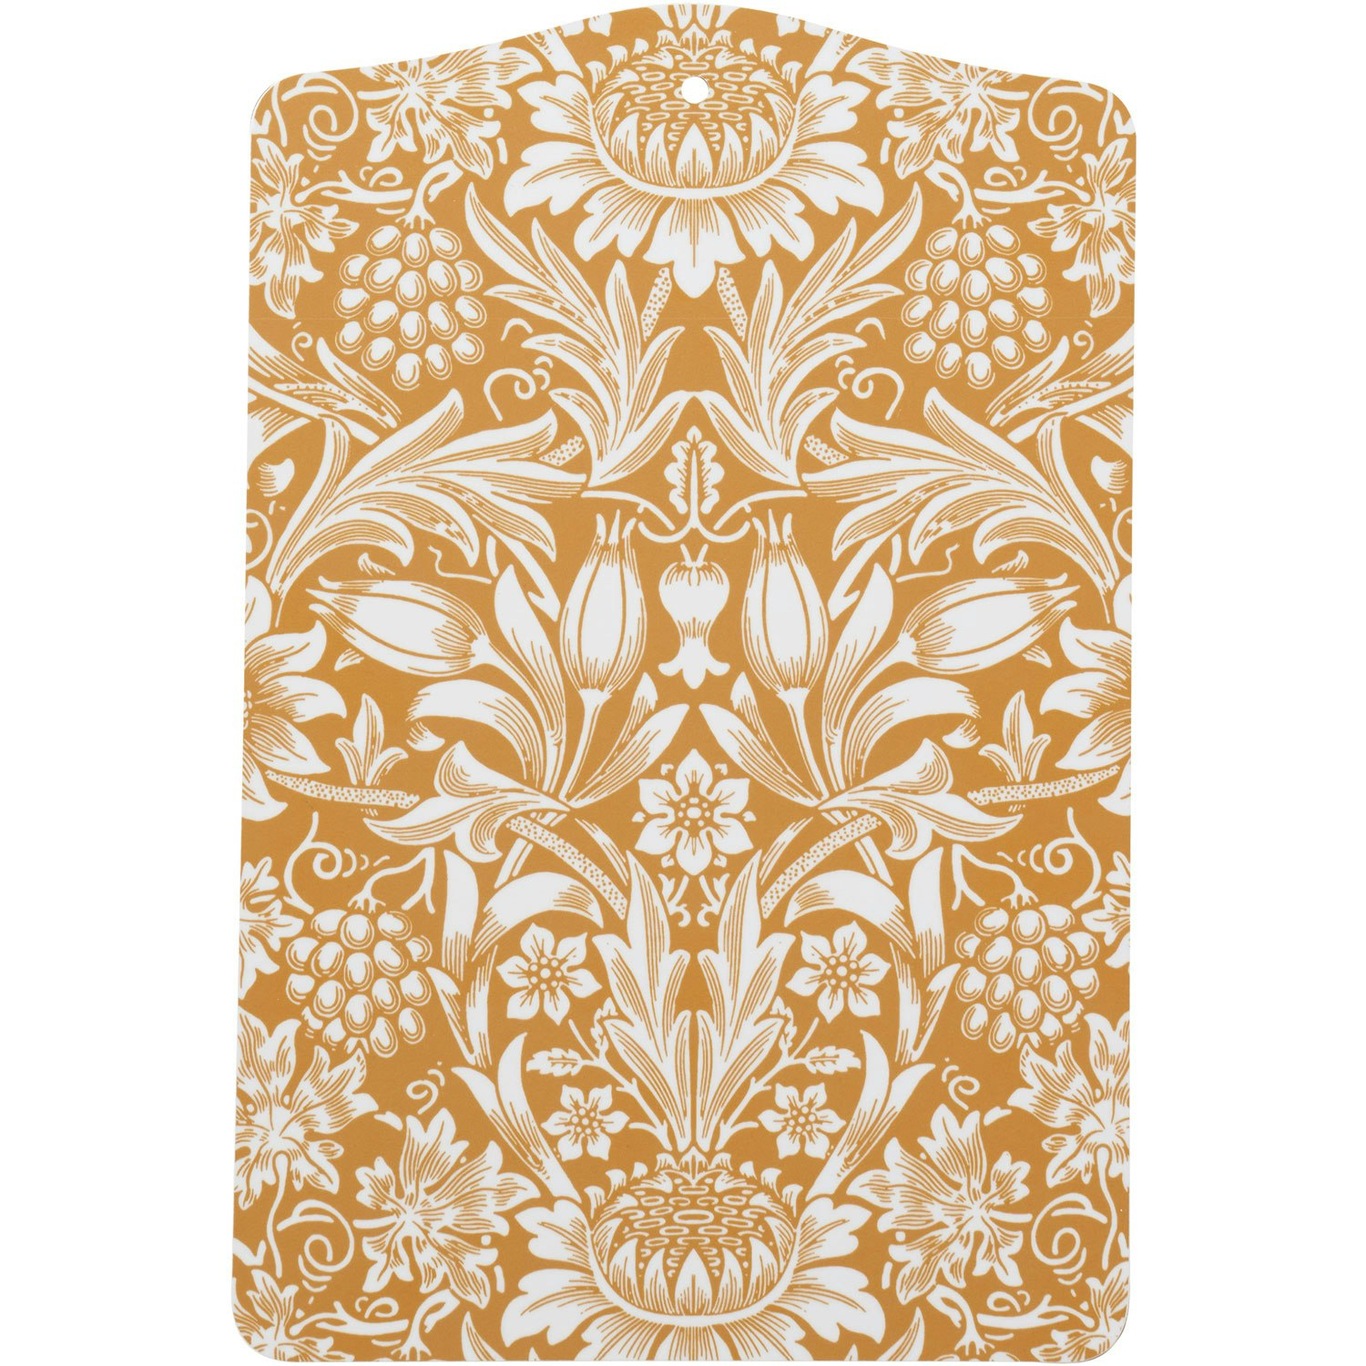 https://royaldesign.com/image/2/klippan-yllefabrik-sunflower-golden-cutting-board-golden-29x19-0?w=800&quality=80